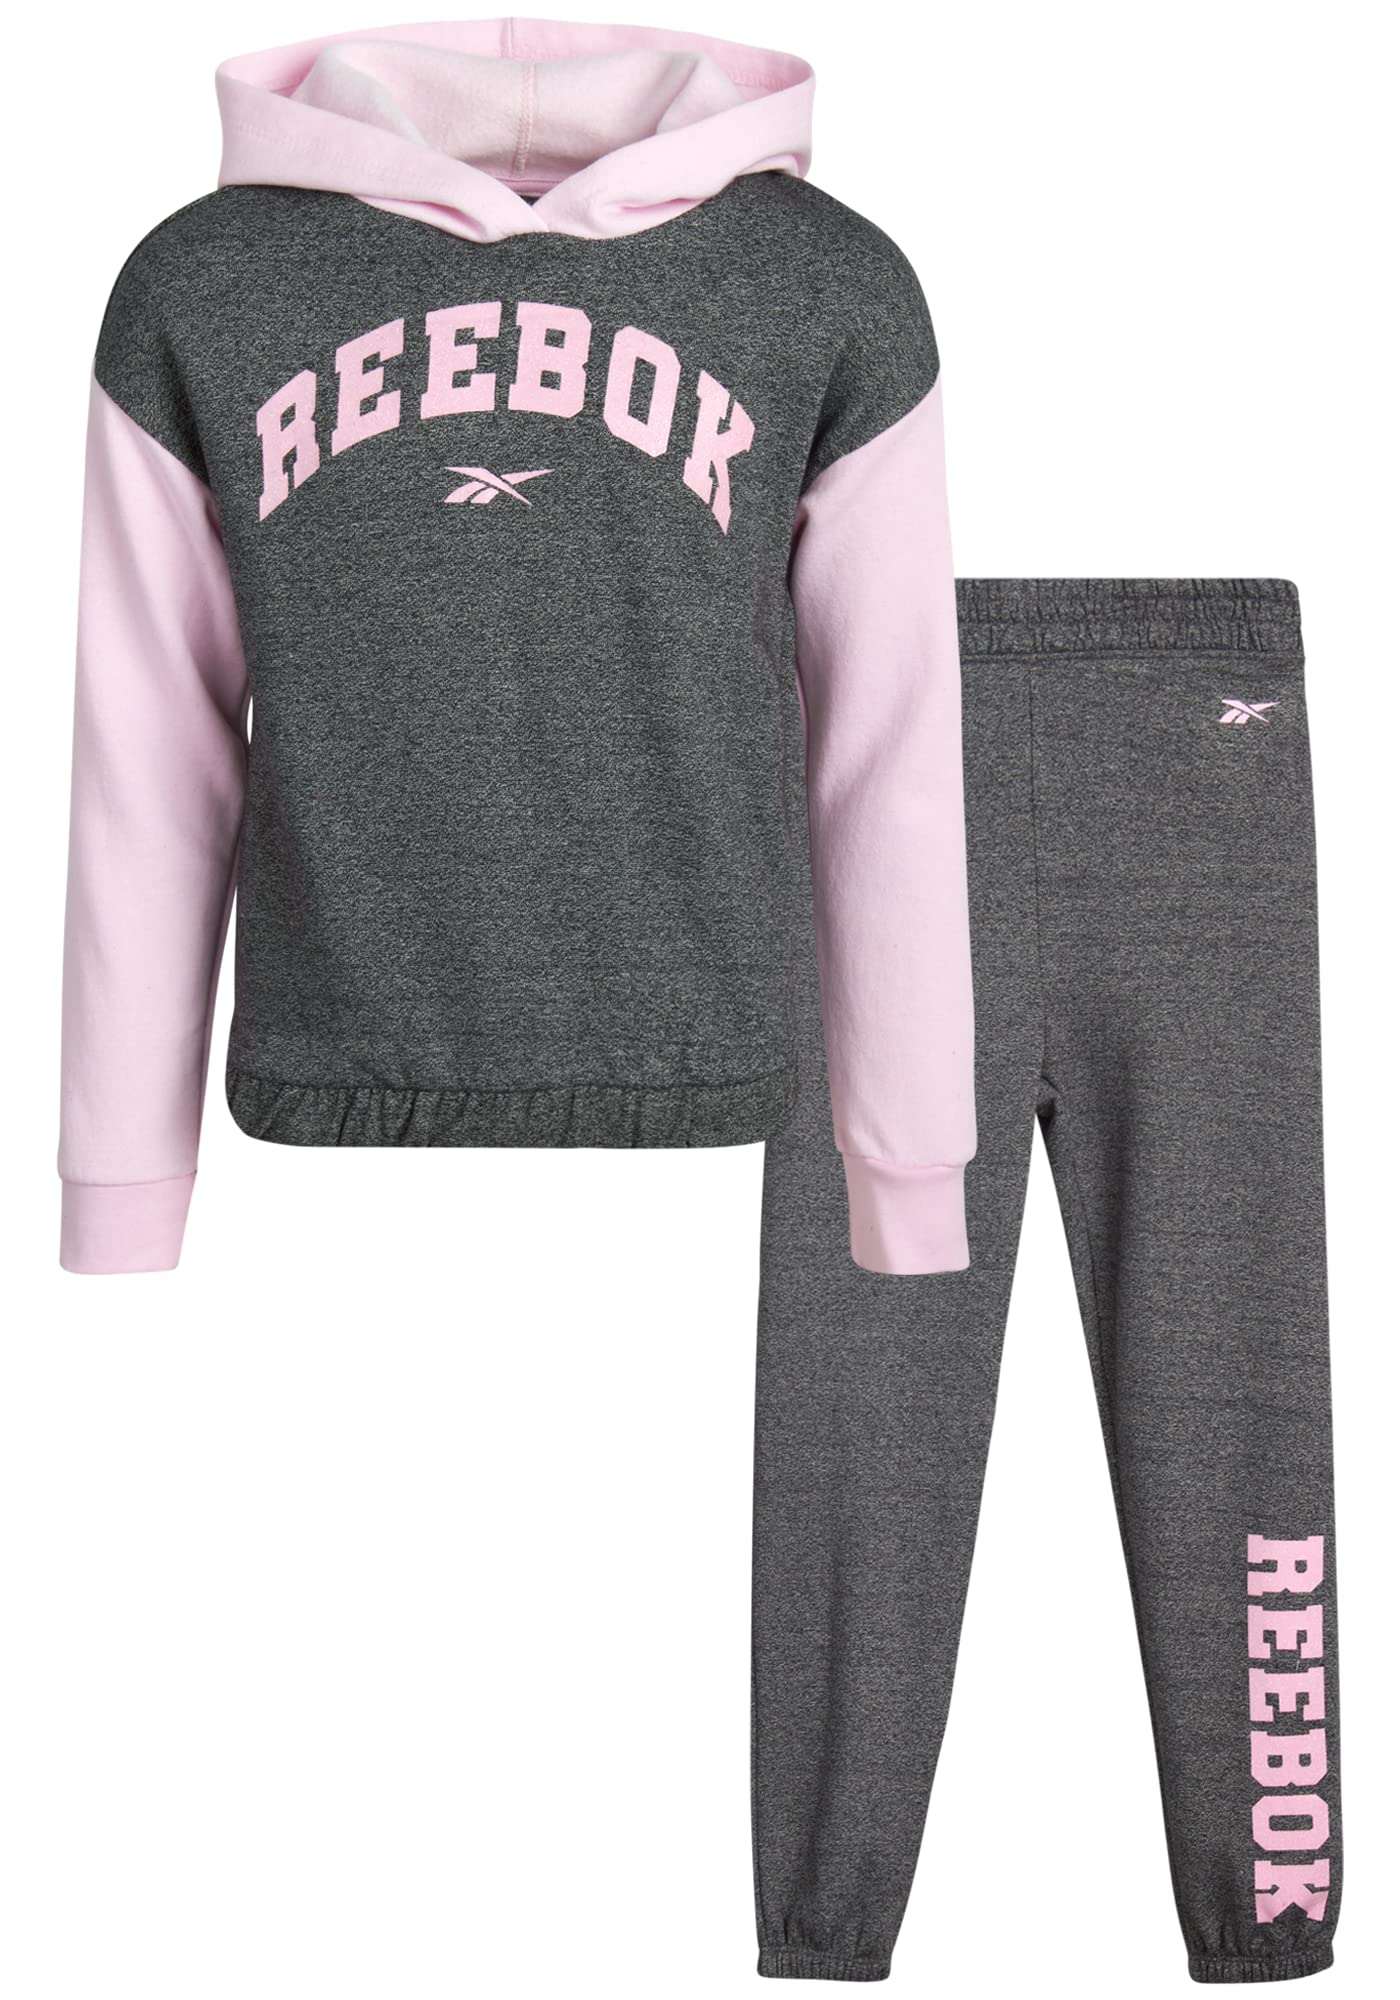 Reebok Girls' Sweatsuit Set - 2 Piece Fleece Hoodie and Jogger